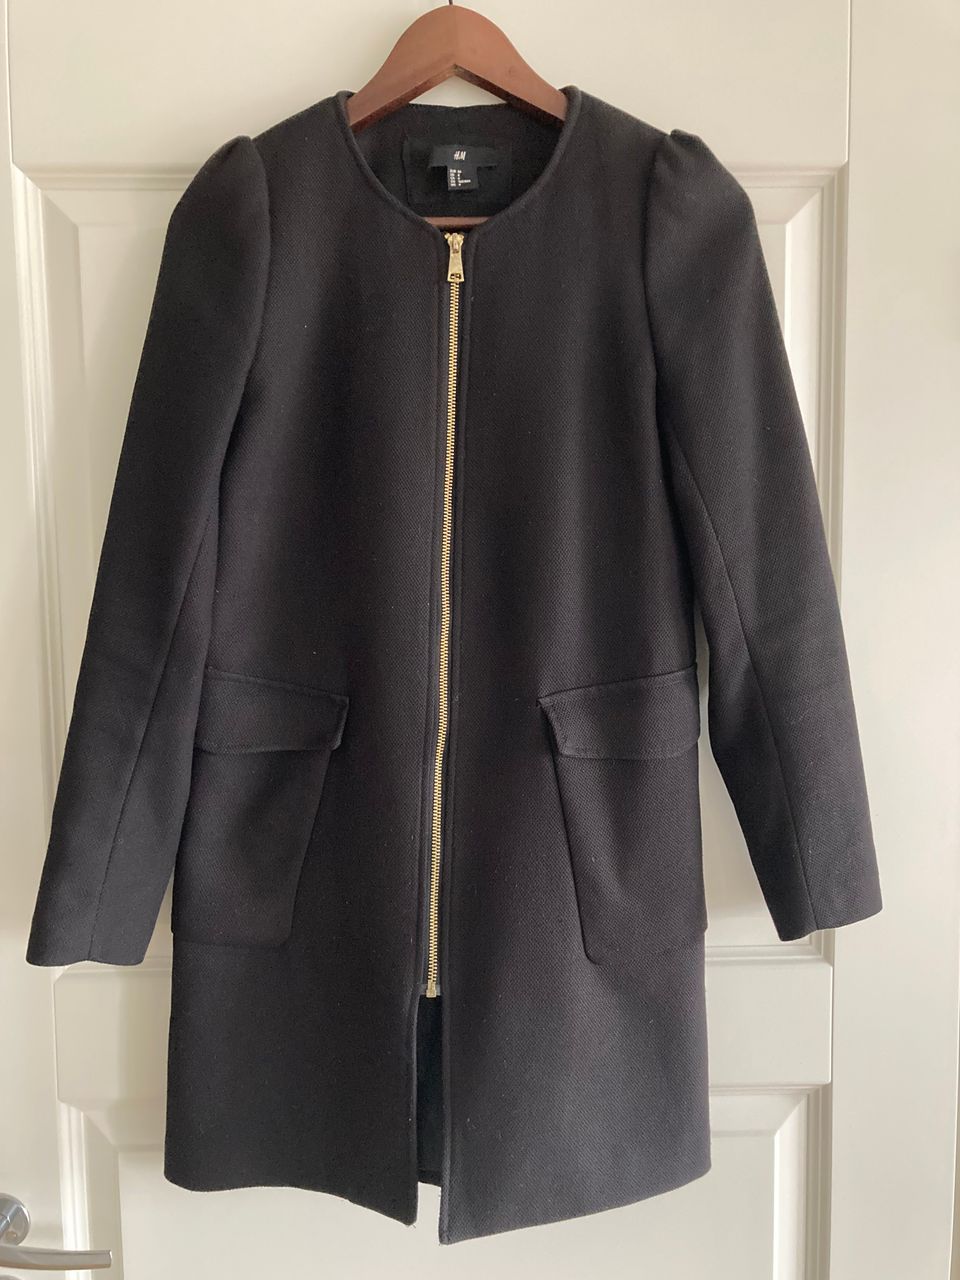 H&M musta takki koko 34